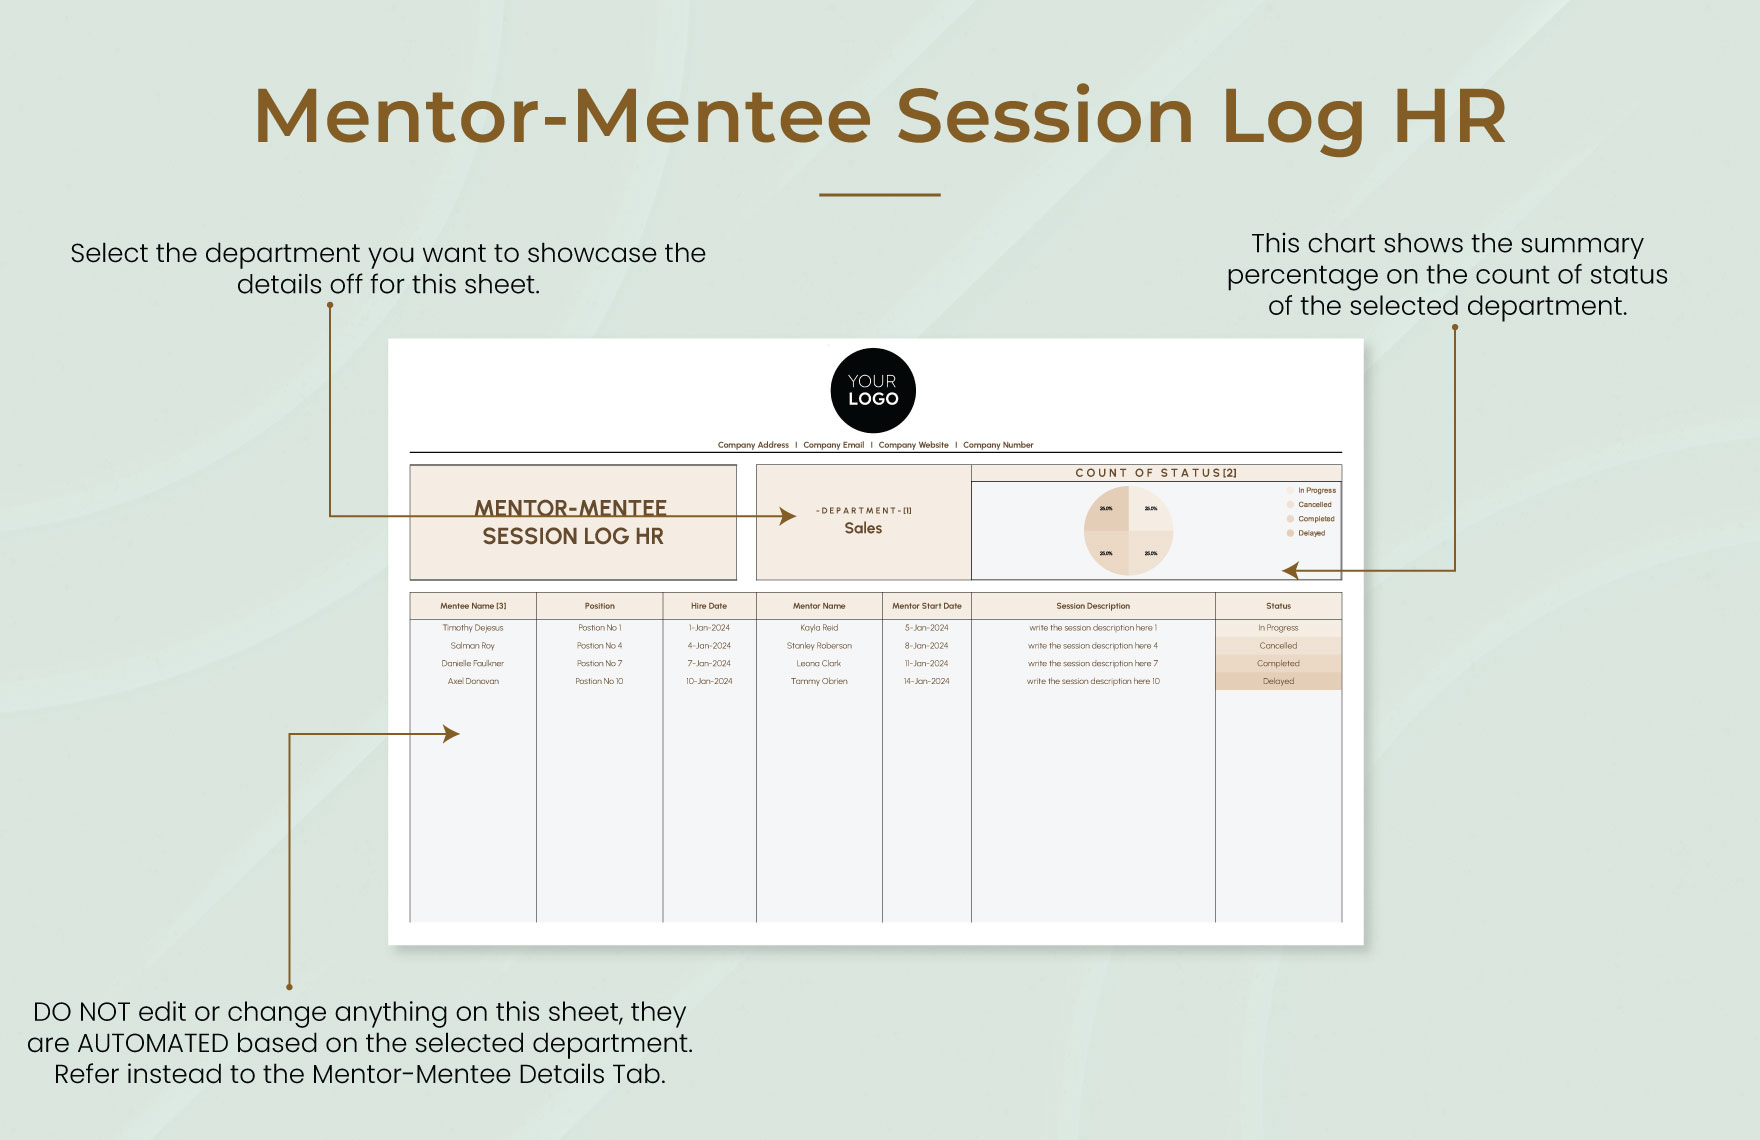 Mentor-Mentee Session Log HR Template